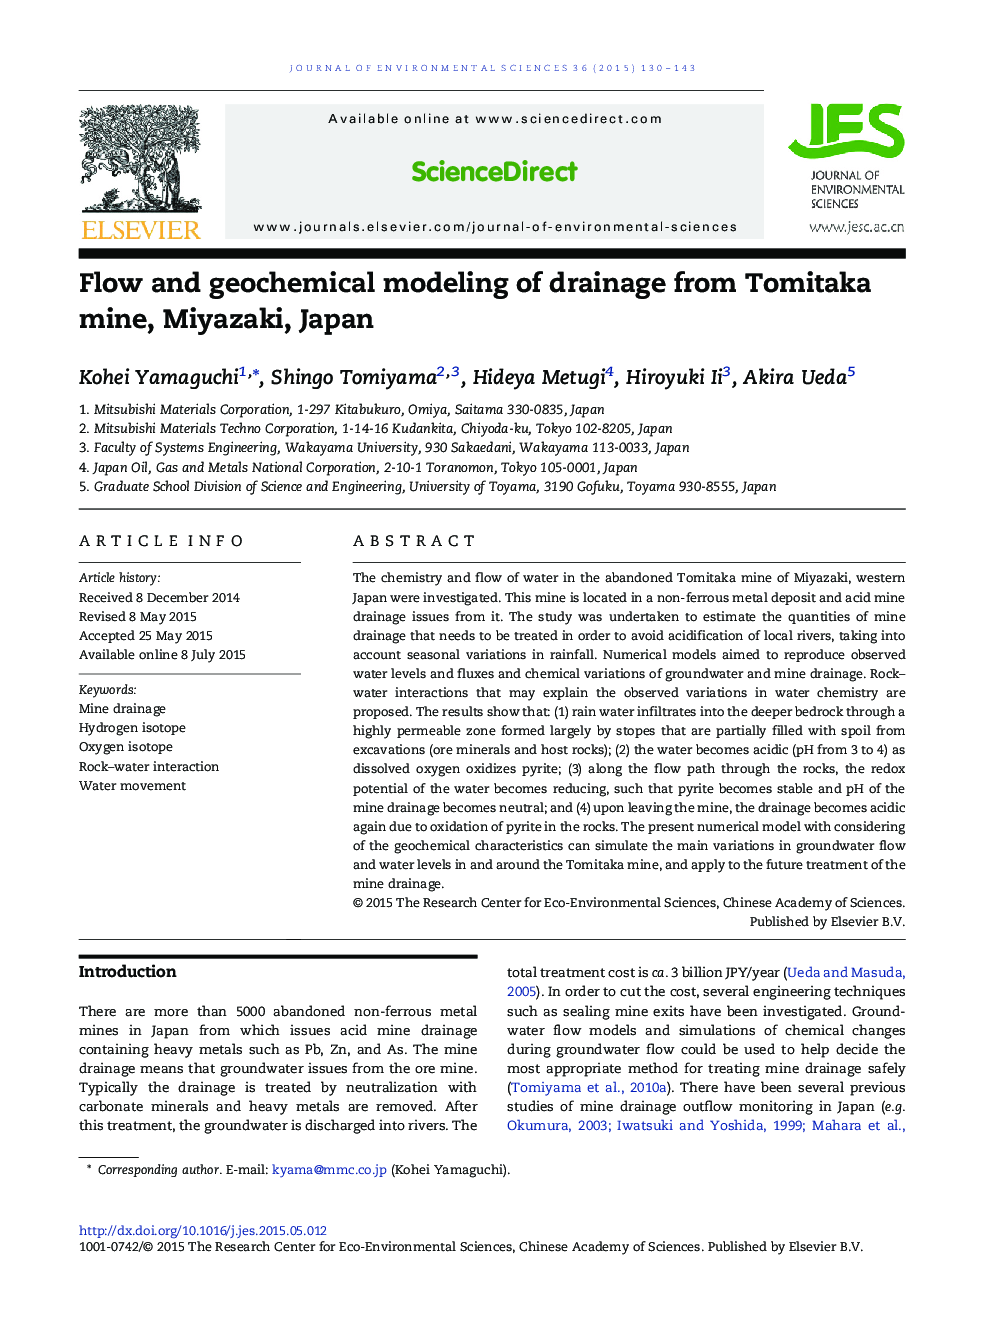 Flow and geochemical modeling of drainage from Tomitaka mine, Miyazaki, Japan